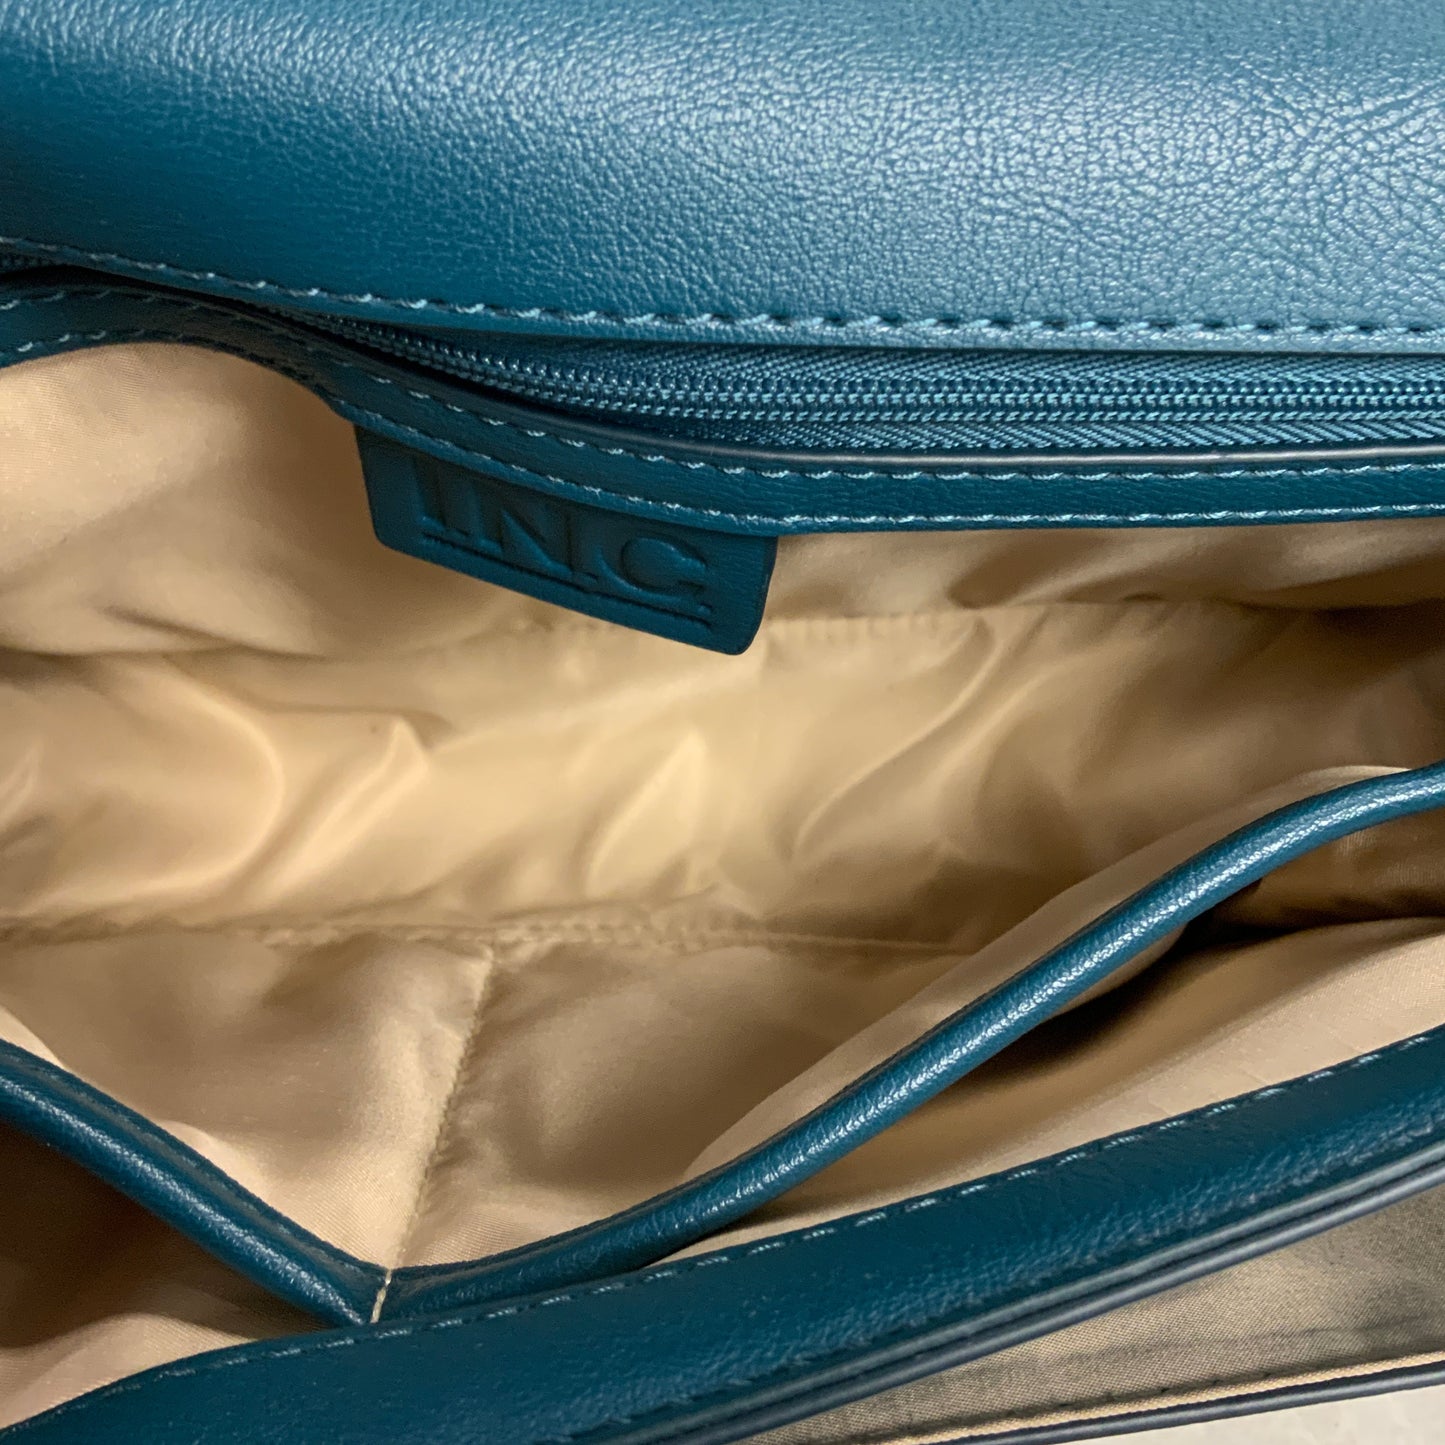 Handbag By Inc  Size: Medium